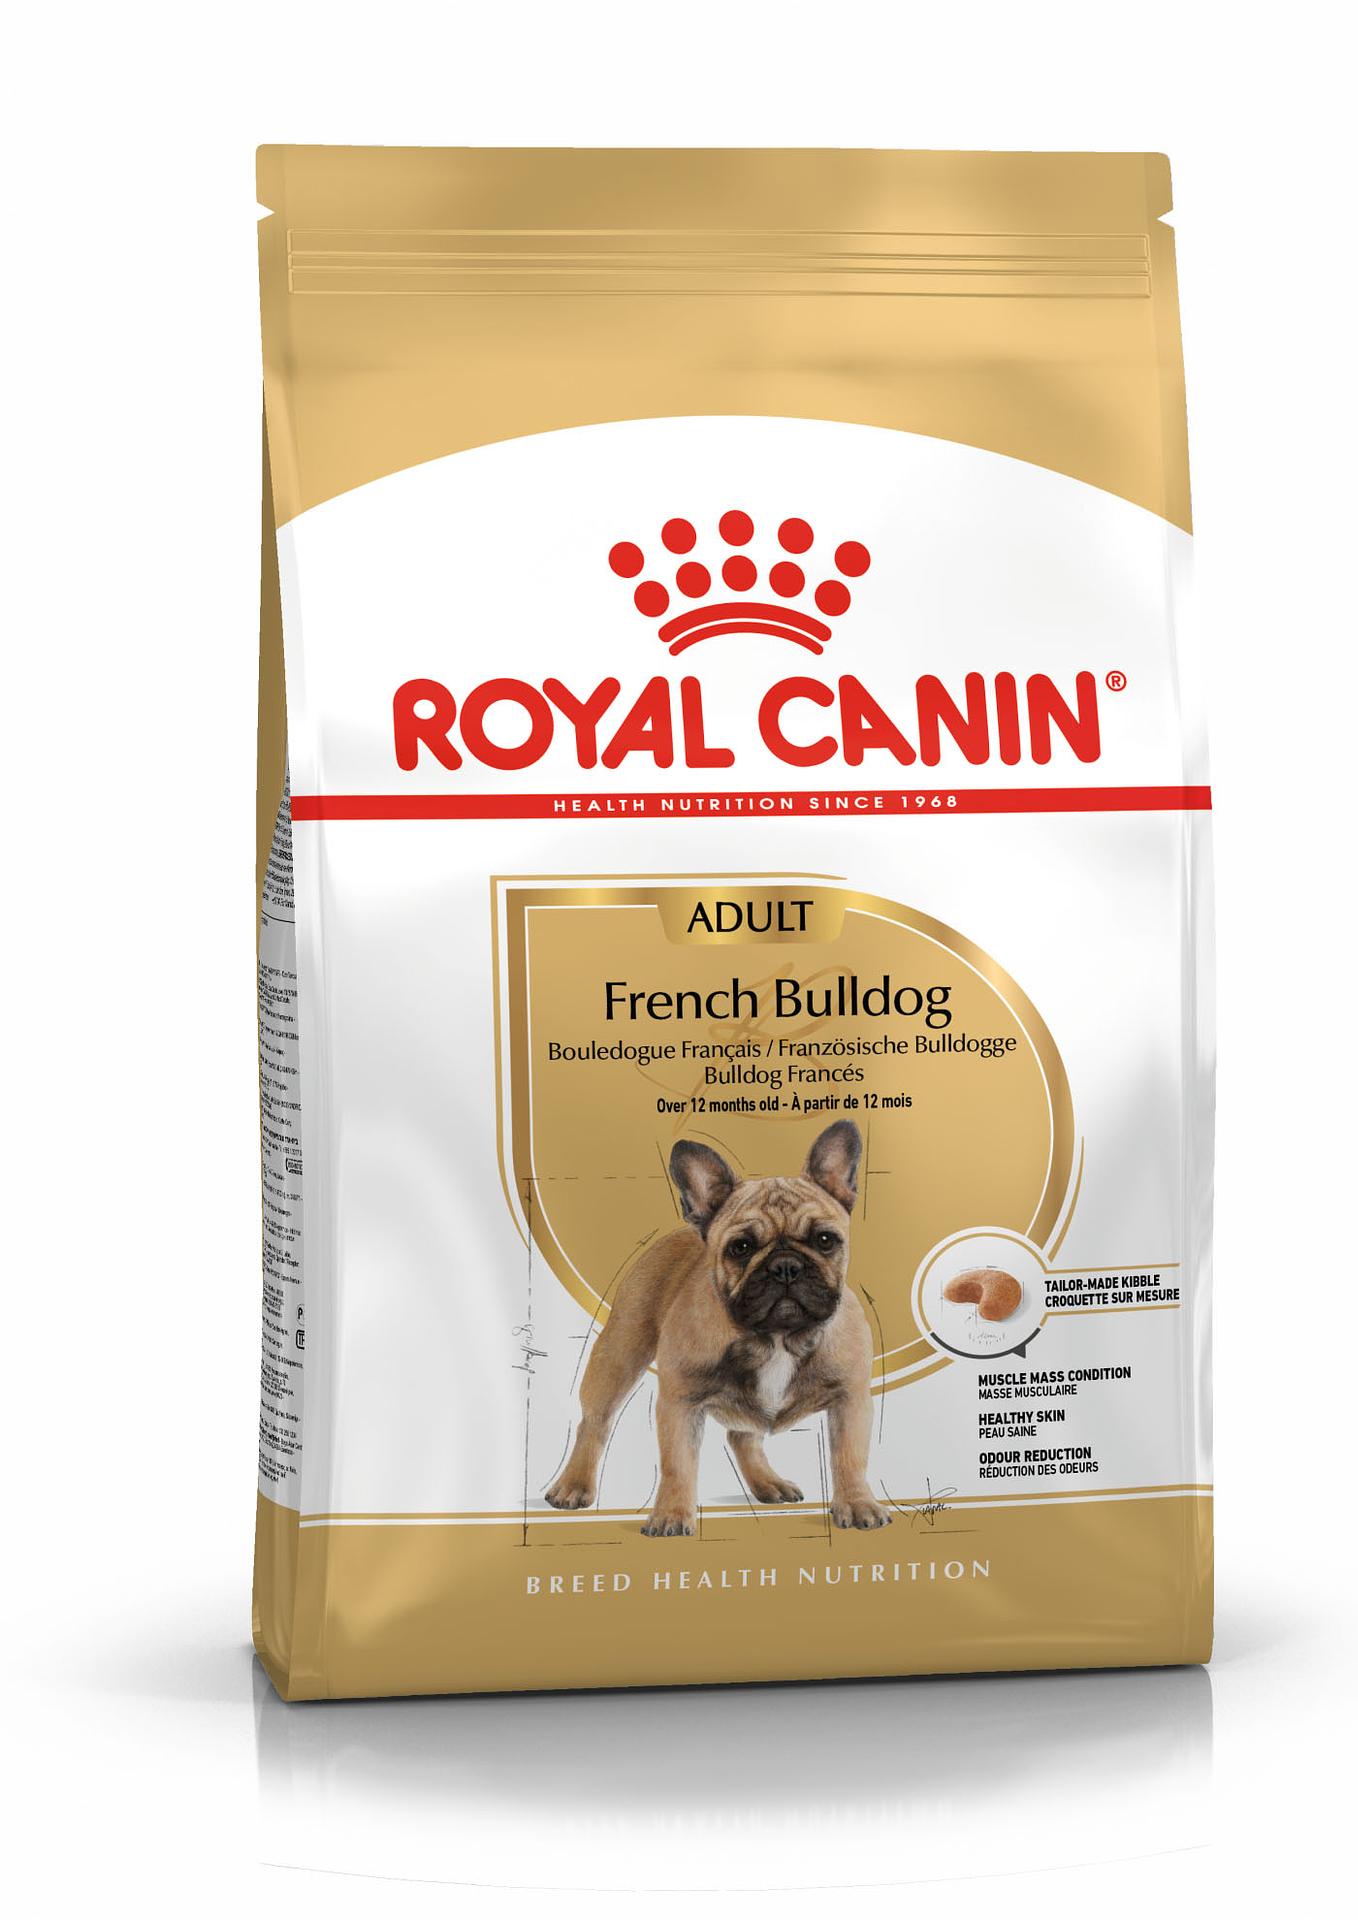 Royal Canin – French Bulldog Adult